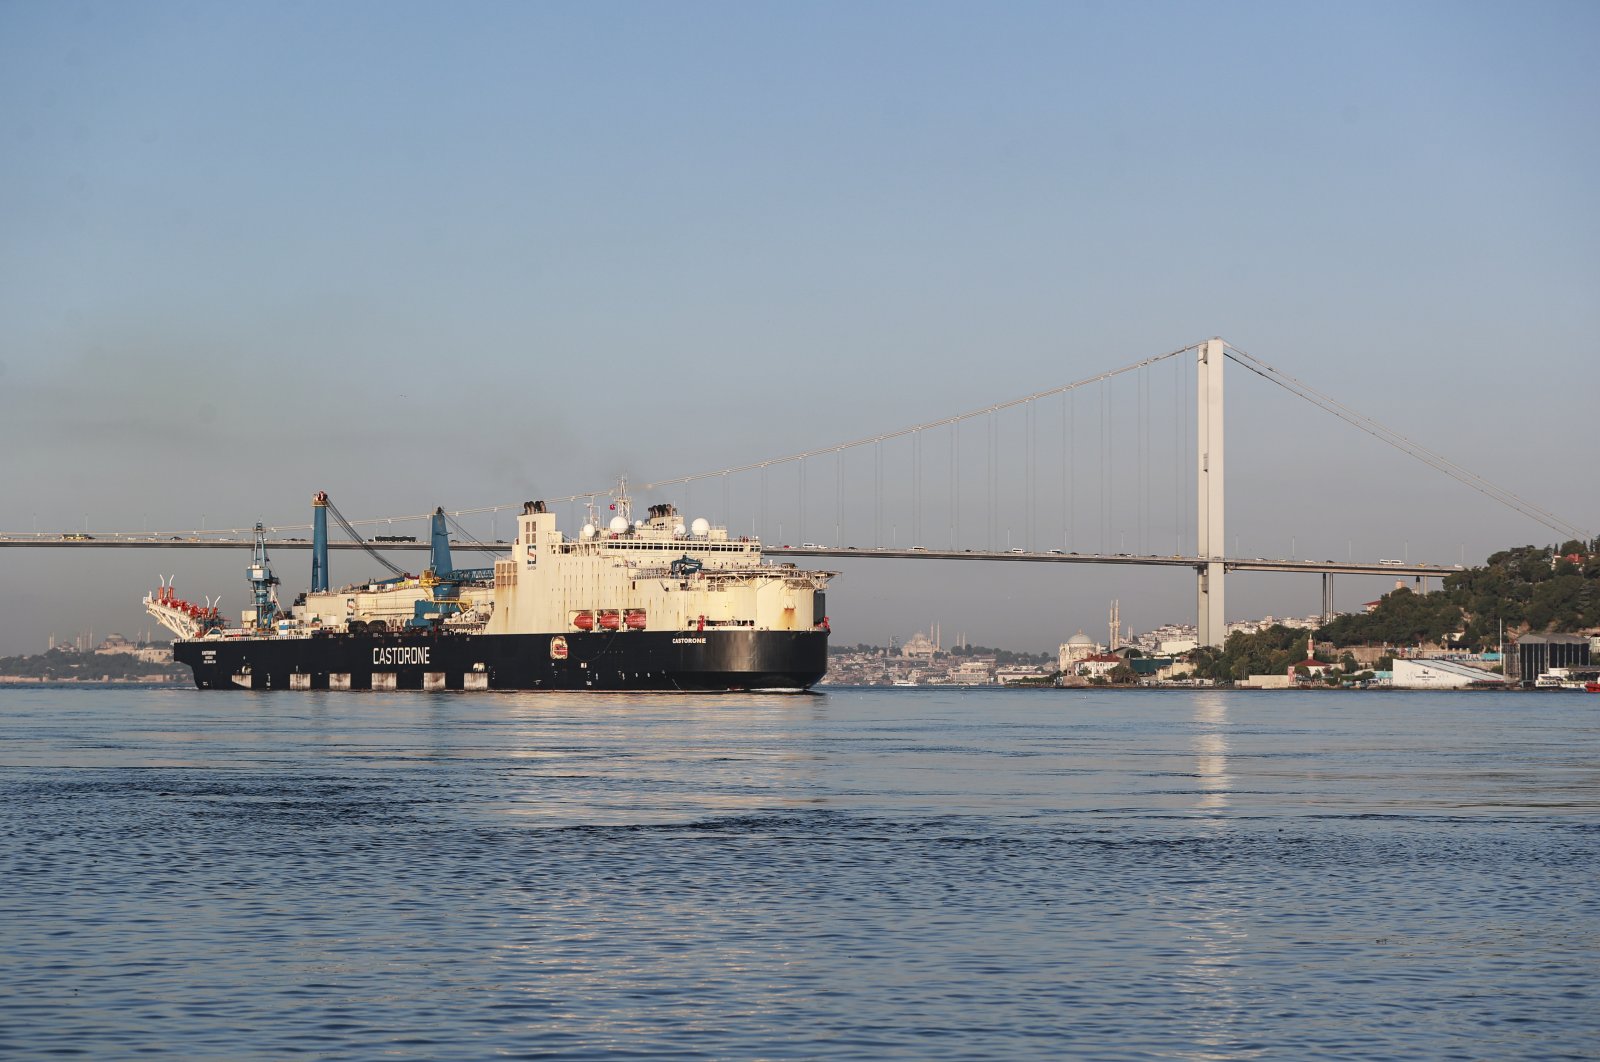 The 325-meter, 56,529-ton Castorone transits the Borposrus, Istanbul, Turkey, July 6, 2022. (AA Photo)